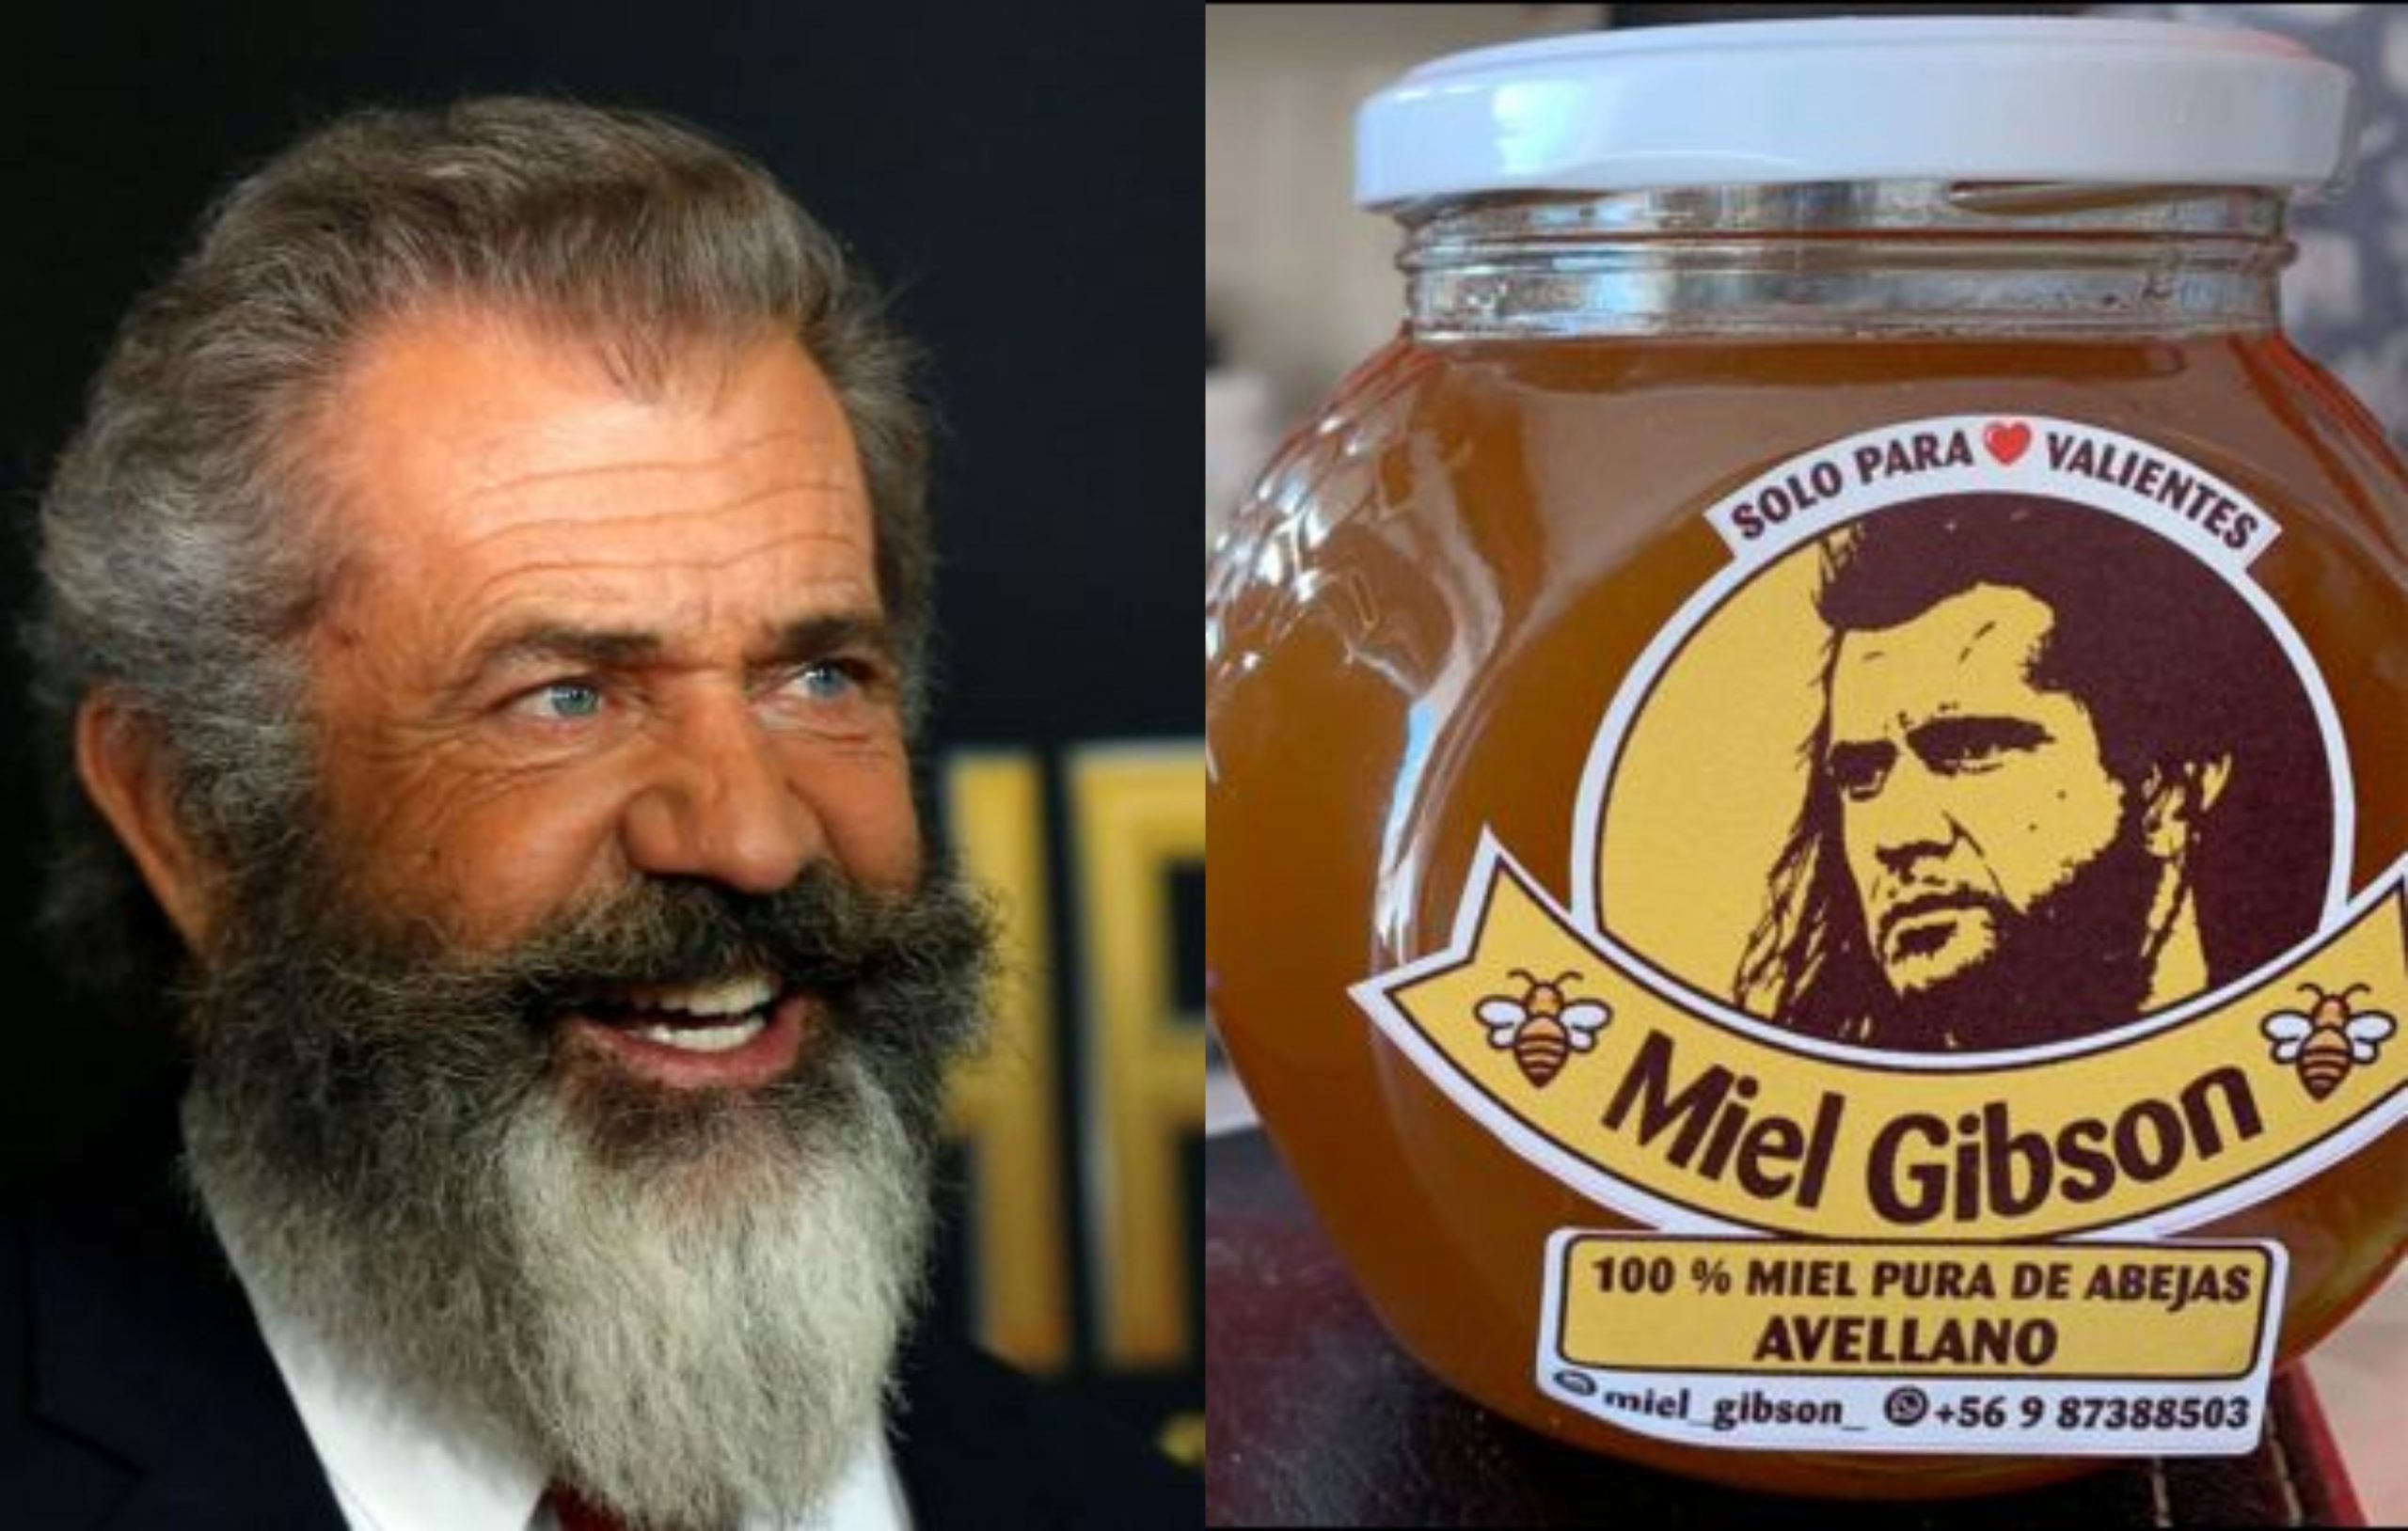 Mel-Gibson-scaled-1.jpg